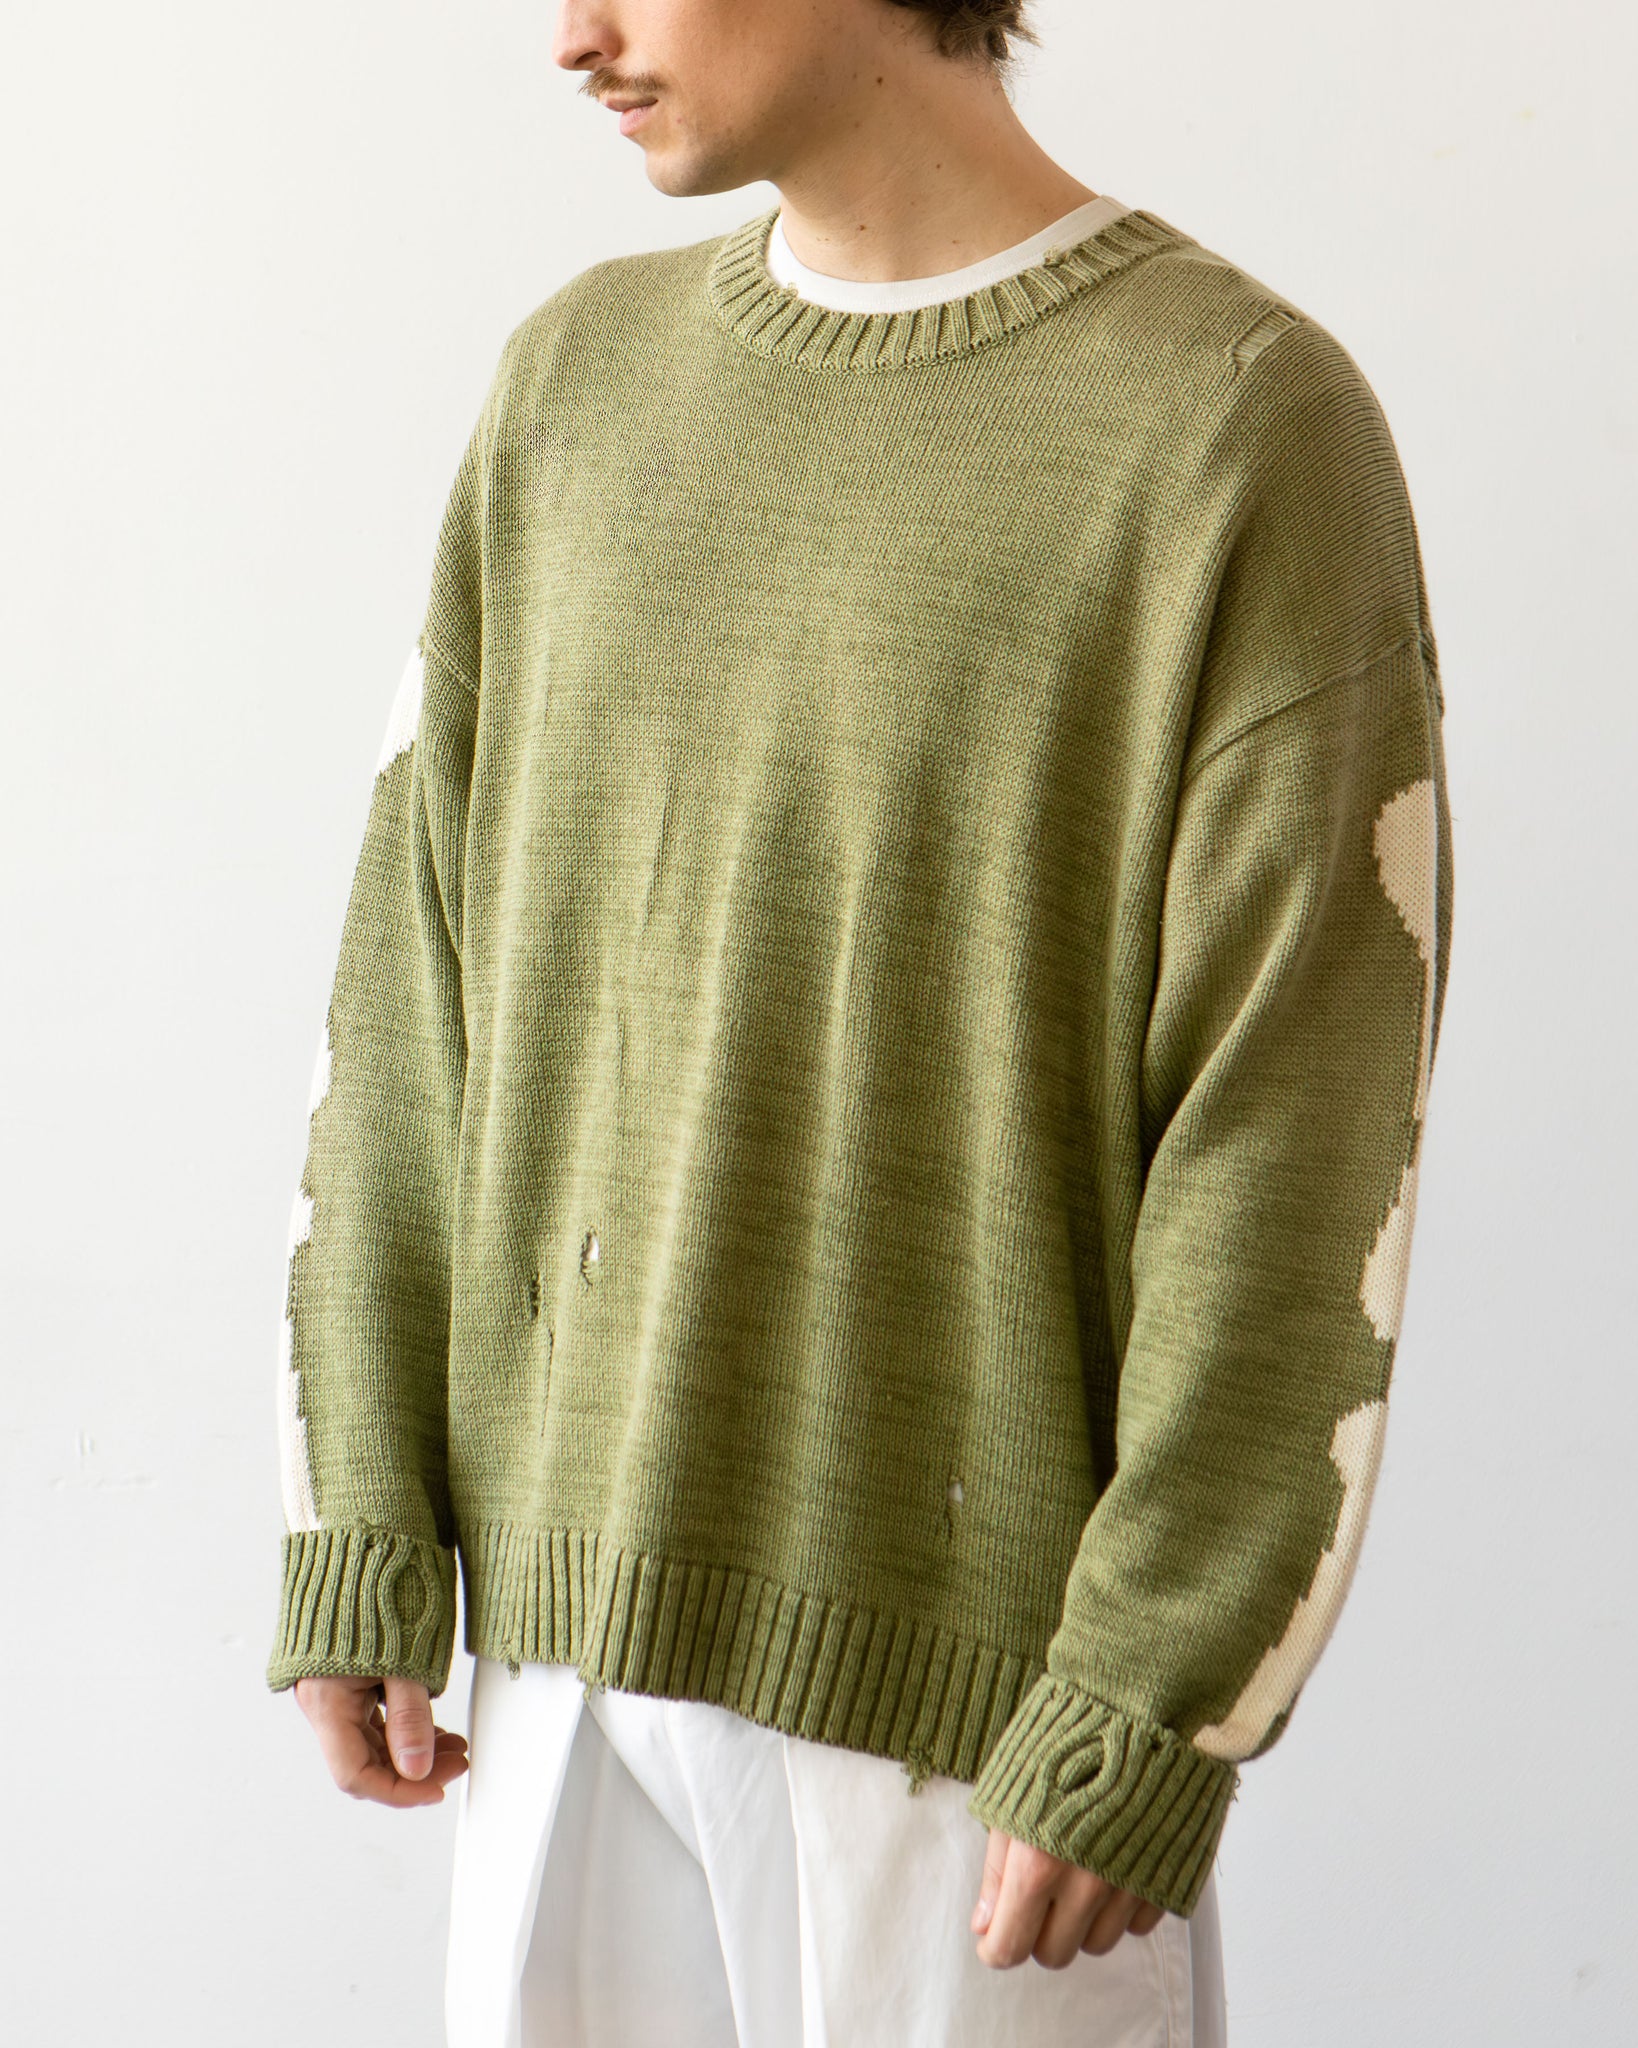 kapital bone knit セーター | hartwellspremium.com